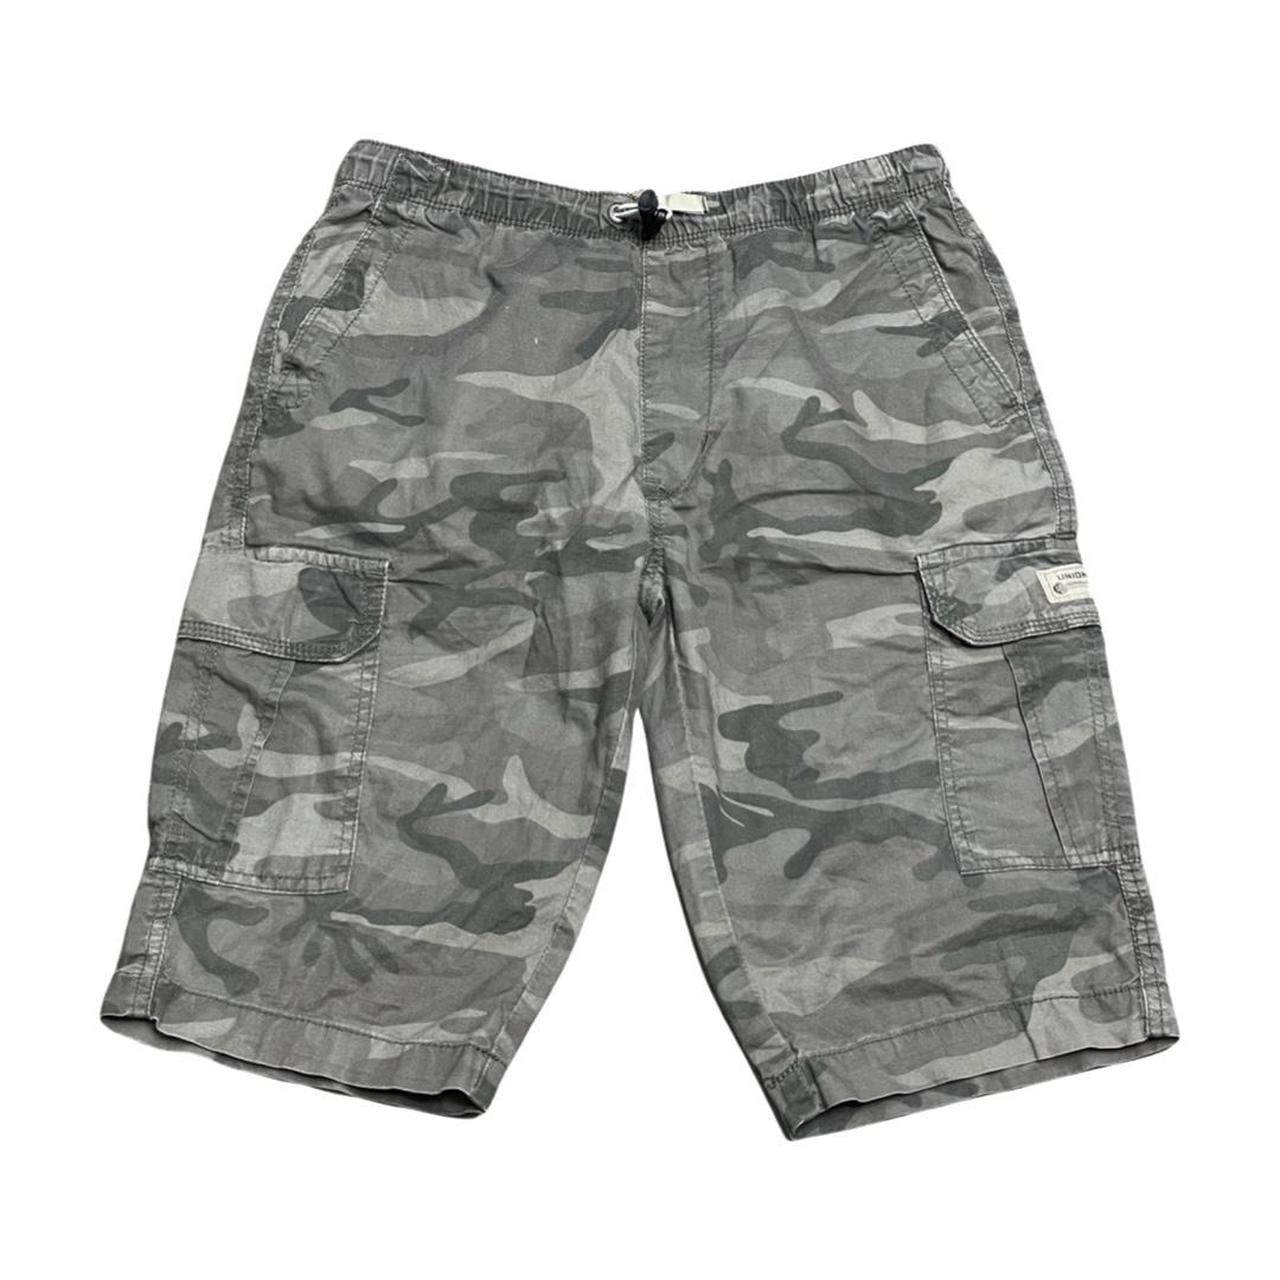 Product Image 1 - ☠︎ unionbay cargo shorts ☠︎

☠︎